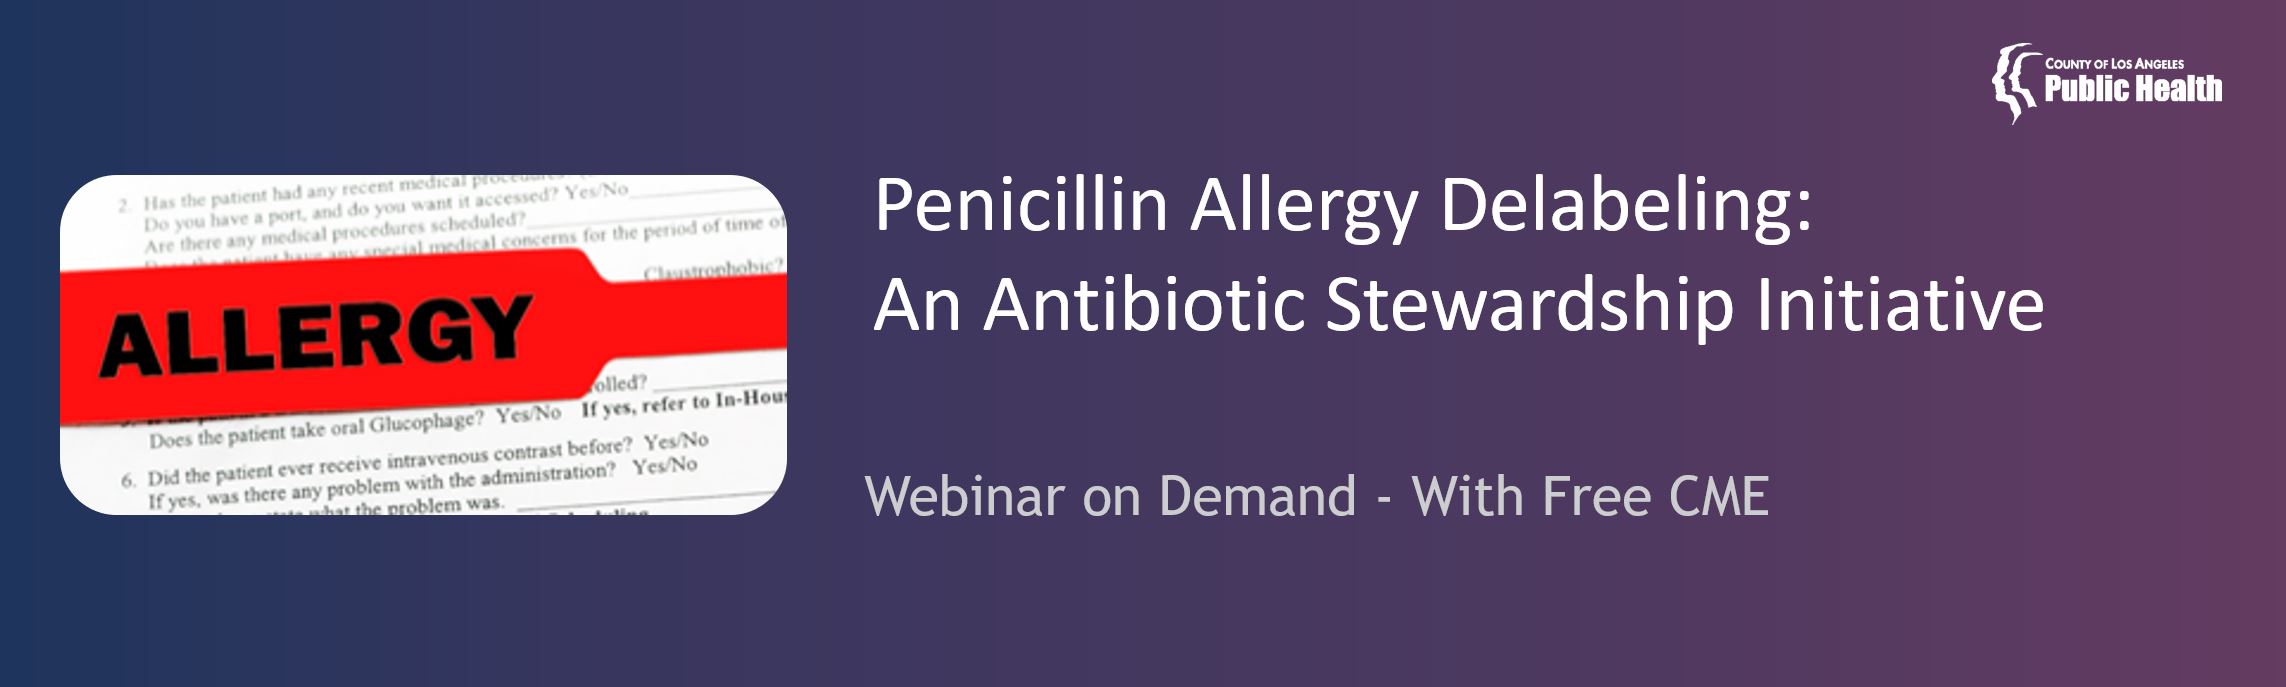 Penicillin Allergy Delabeling: An Antibiotic Stewardship Initiative